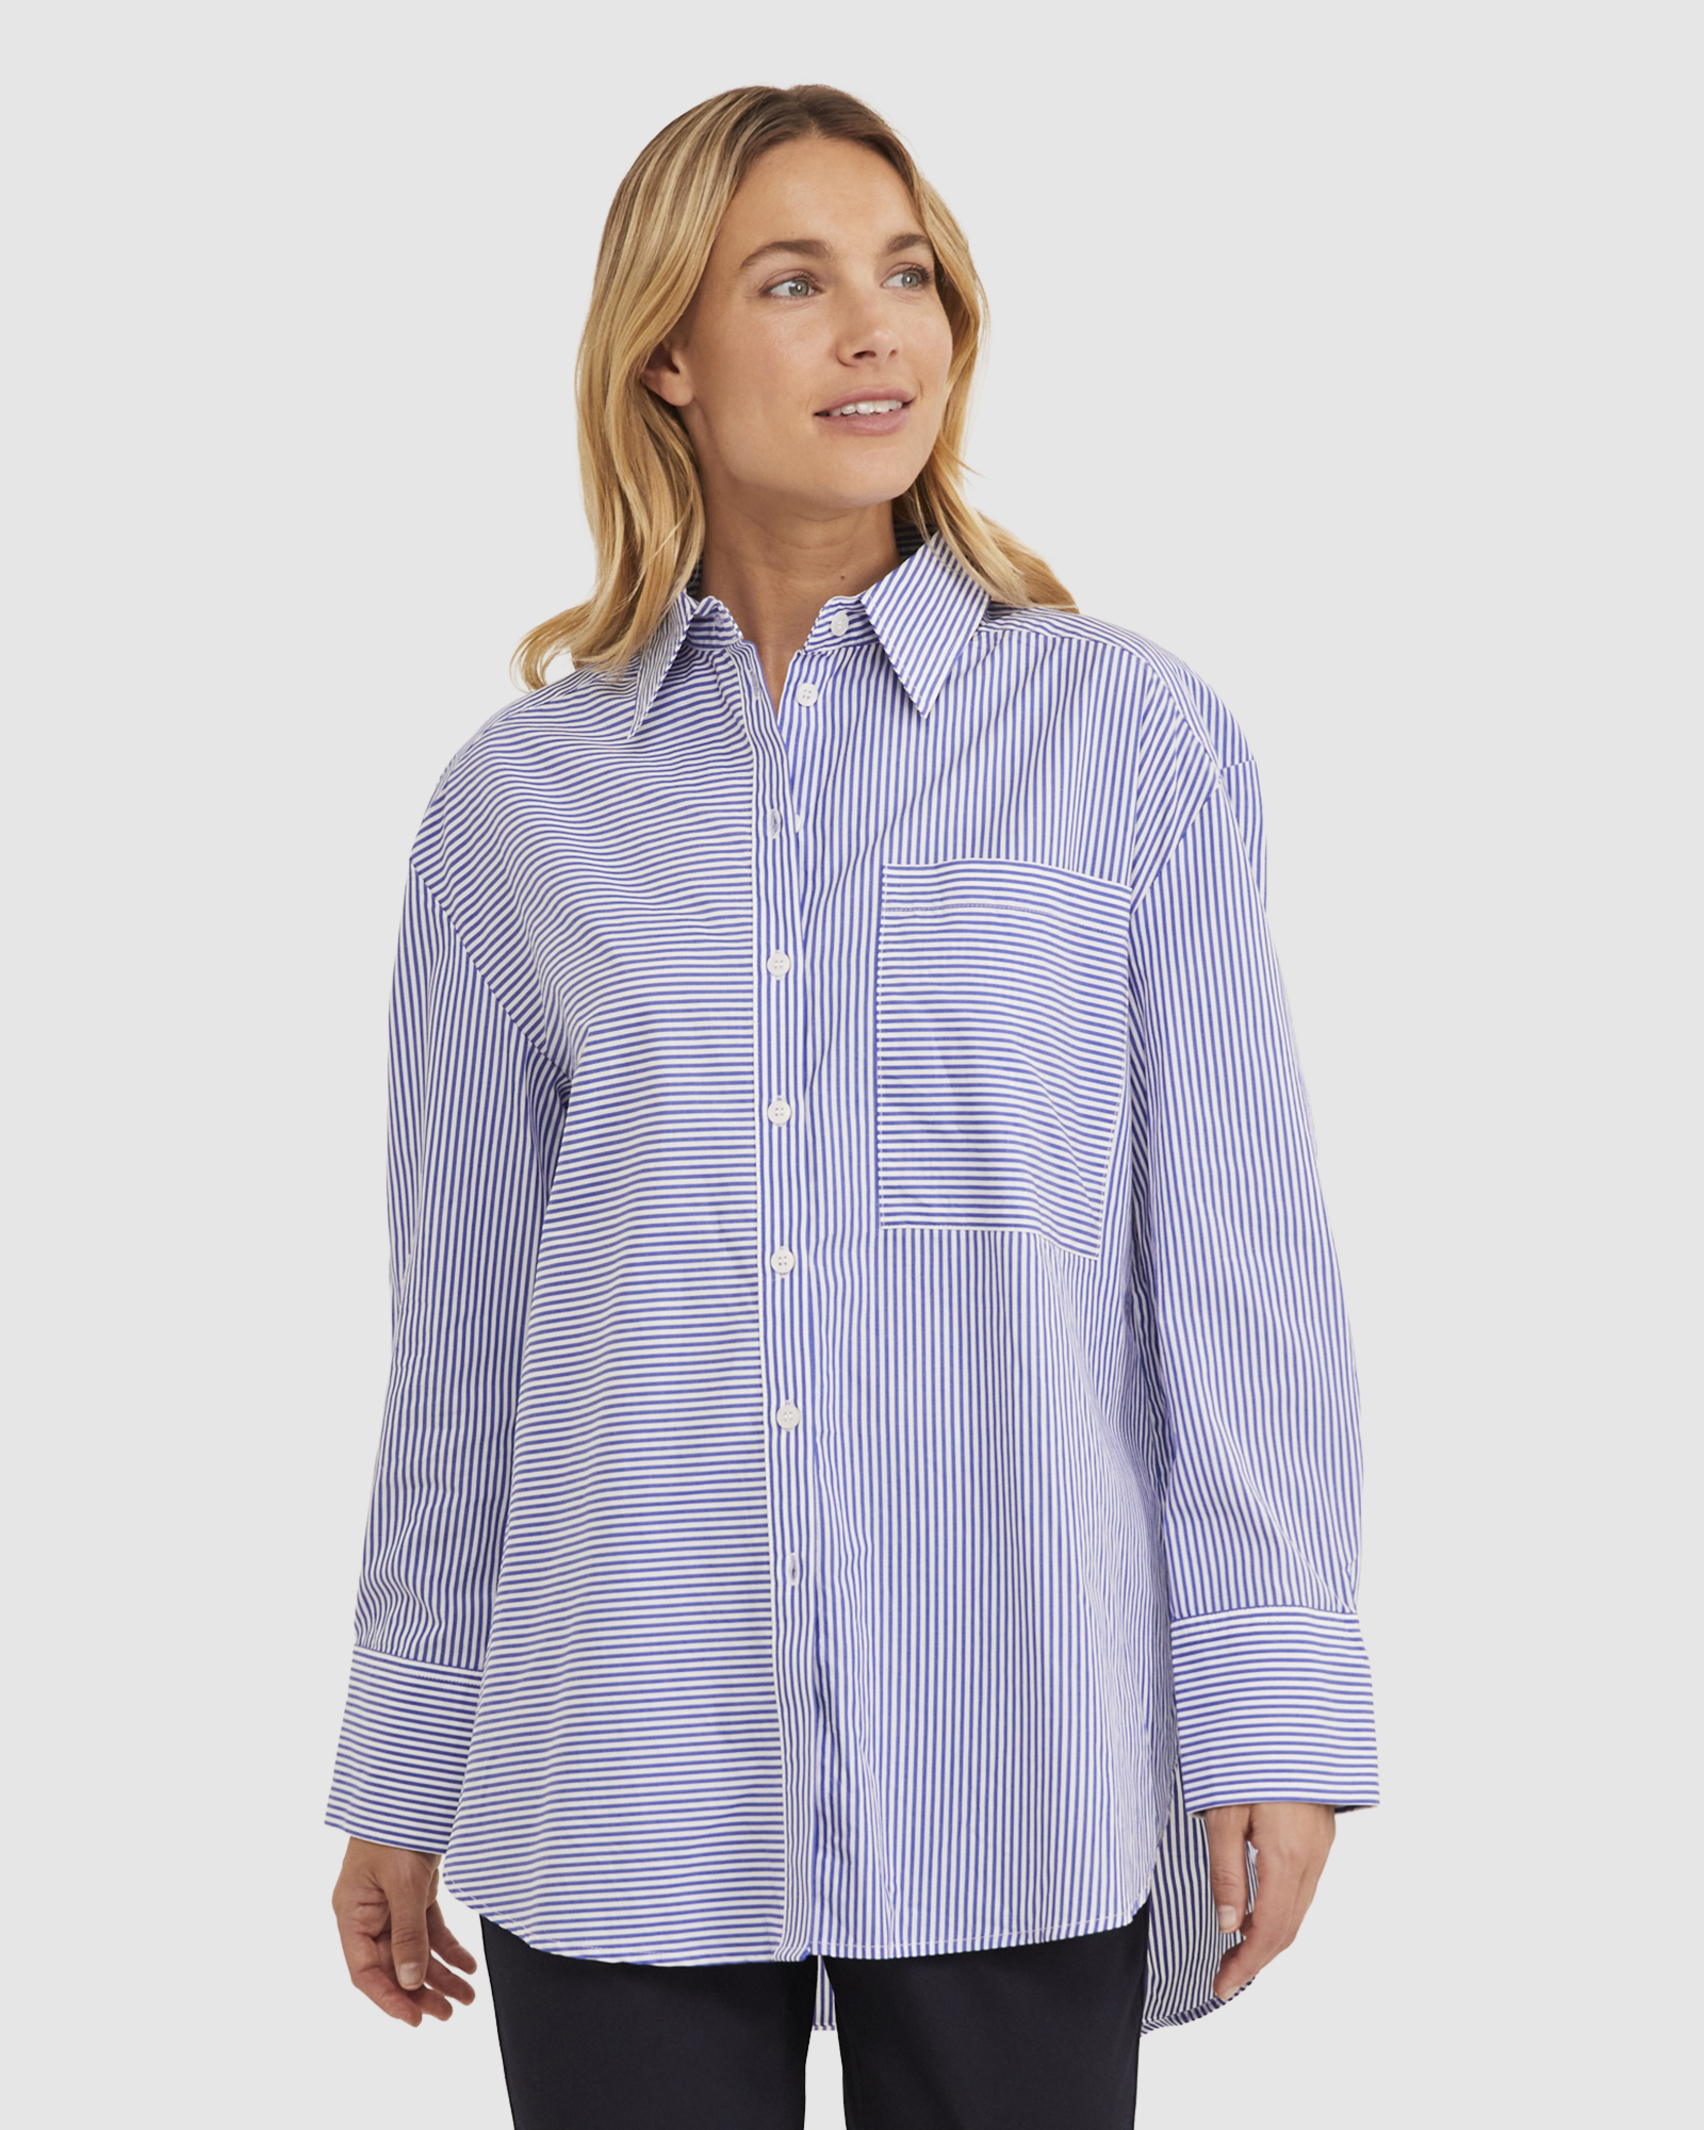 Bailey Stripe Shirt in IVORY/BLUE